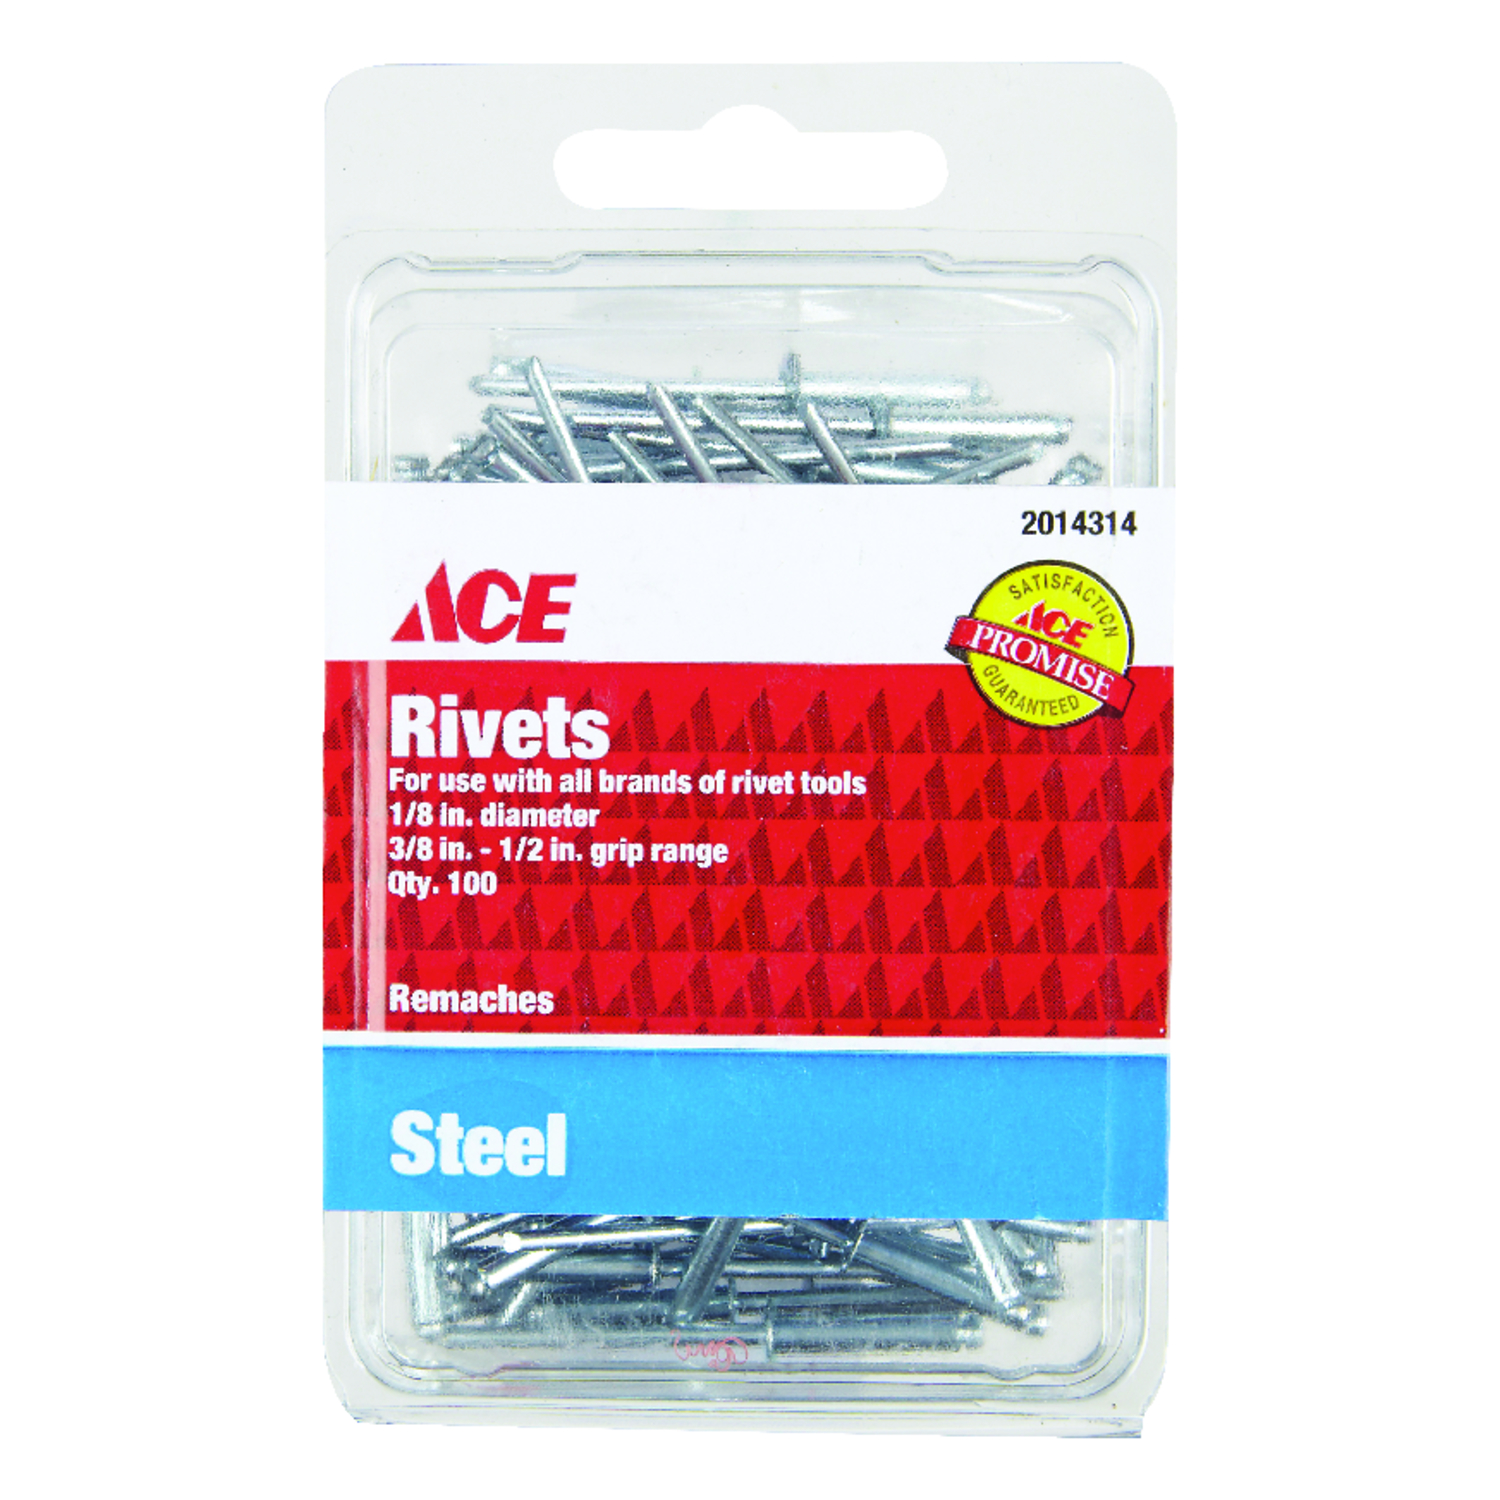 Ace Steel Rivet Tool Red 1 pc. - Miller Industrial